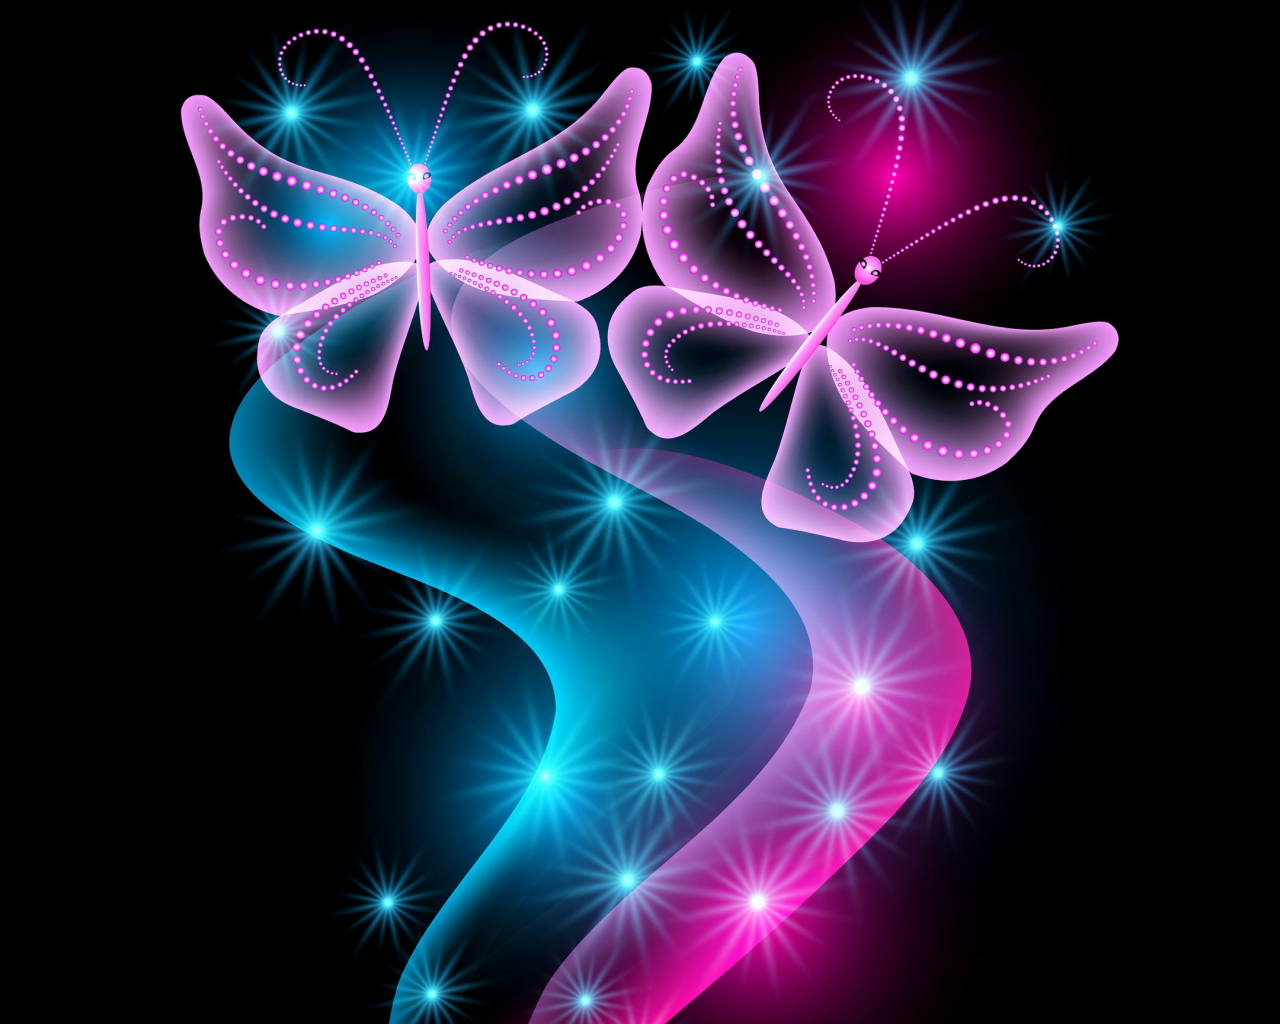 blue, glow, abstract, неоновые, бабочки, pink, butterflies, neon, sparkle